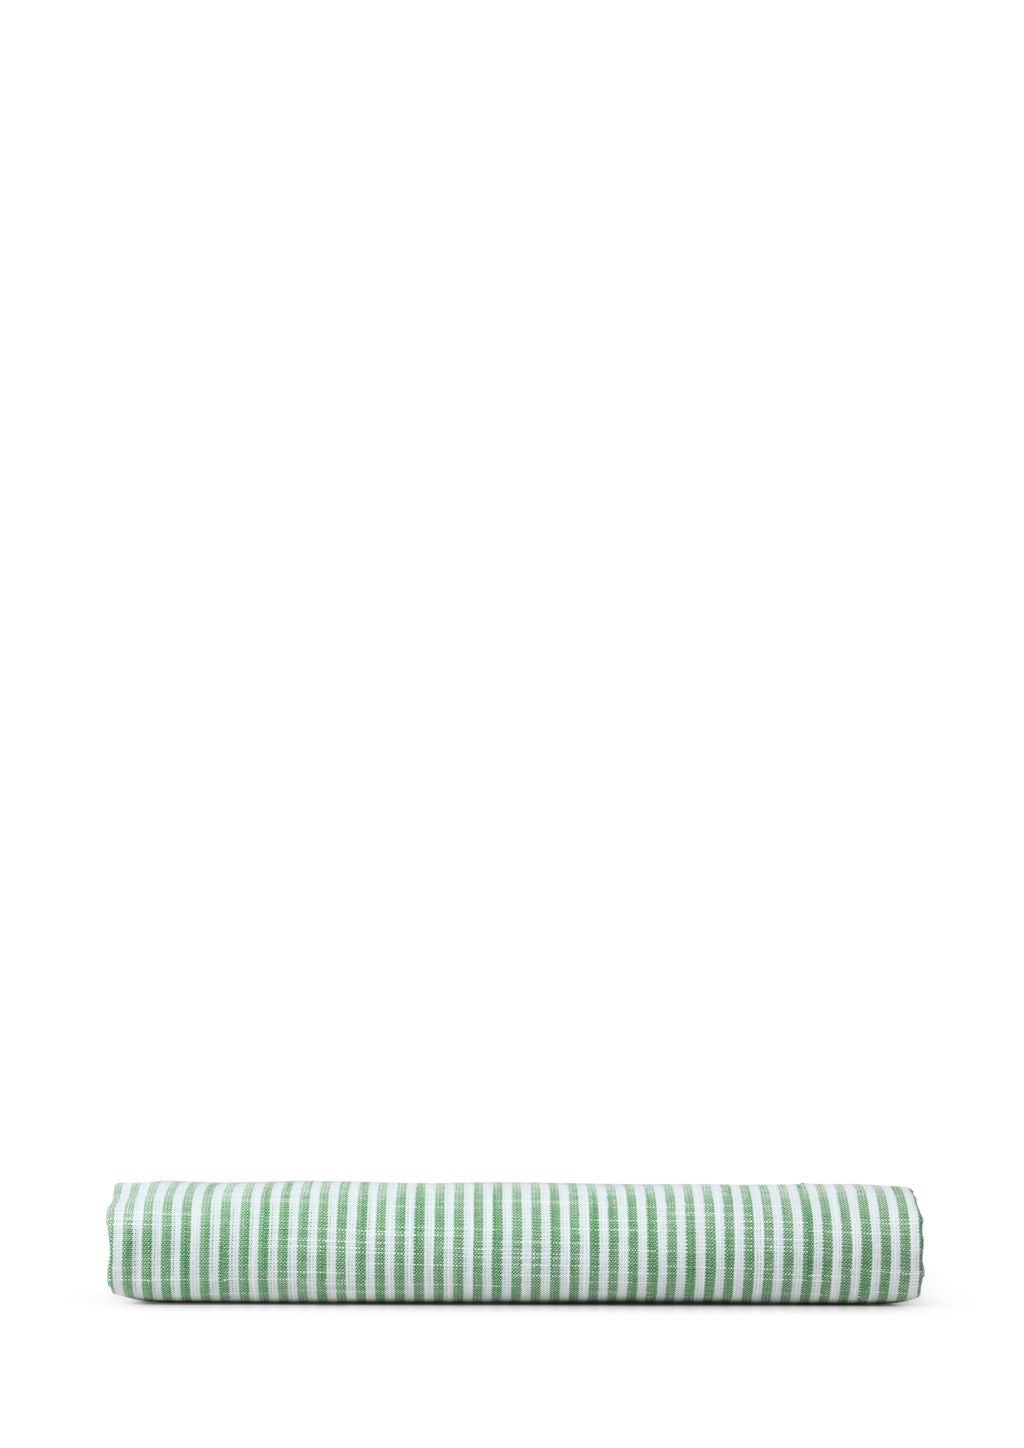 Juna Monochrome Lines Cushion Cover 63 X60 Cm, Green/White